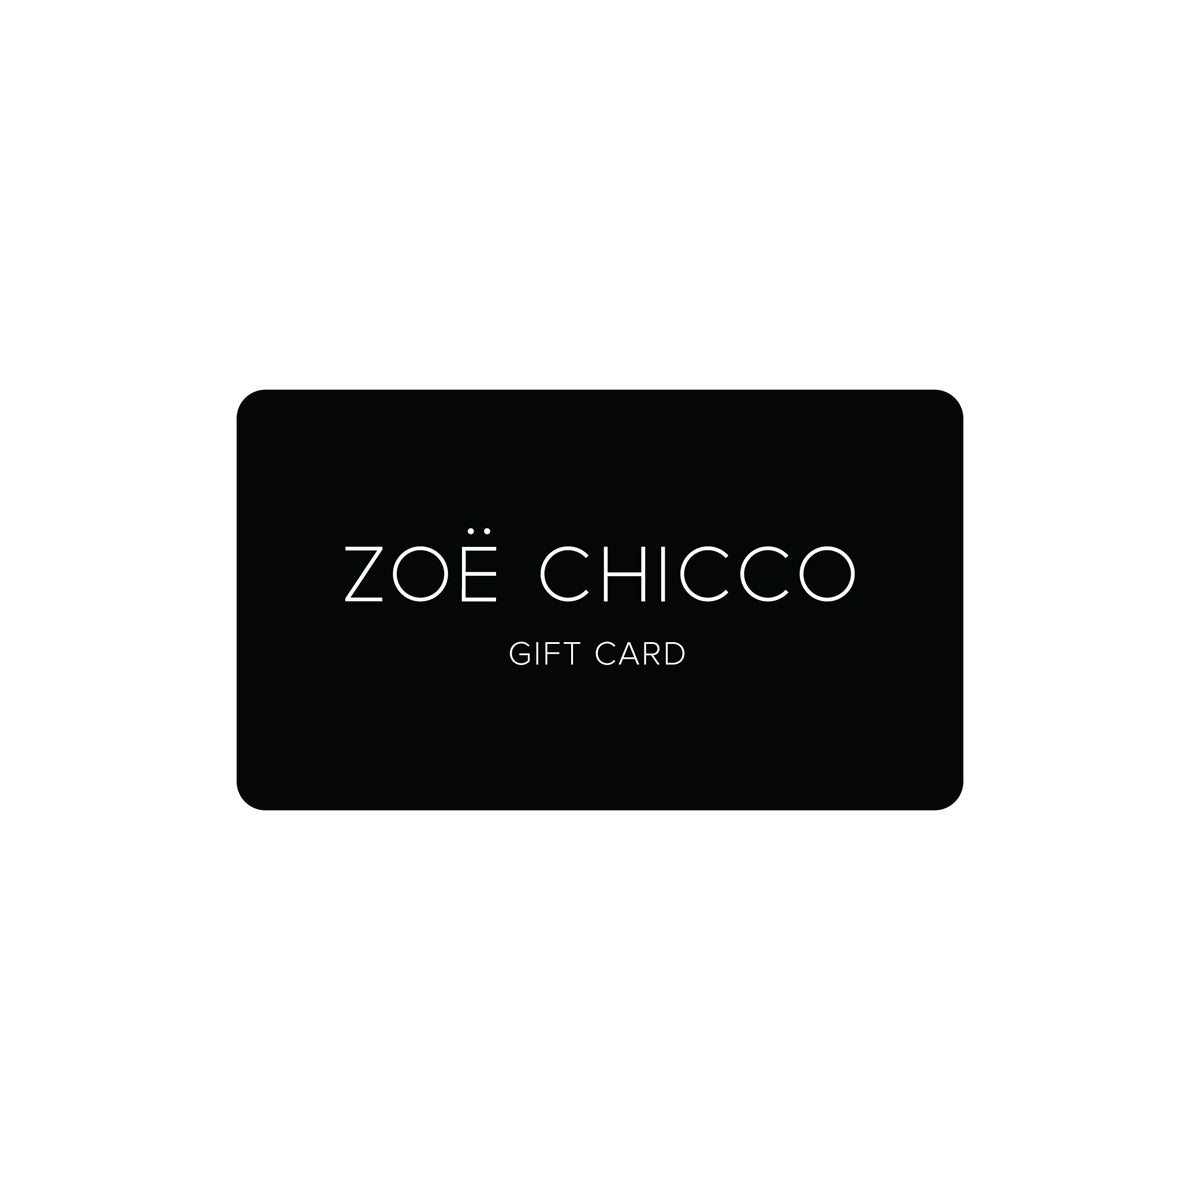 Zoe Chicco Gift Card – ZOË CHICCO